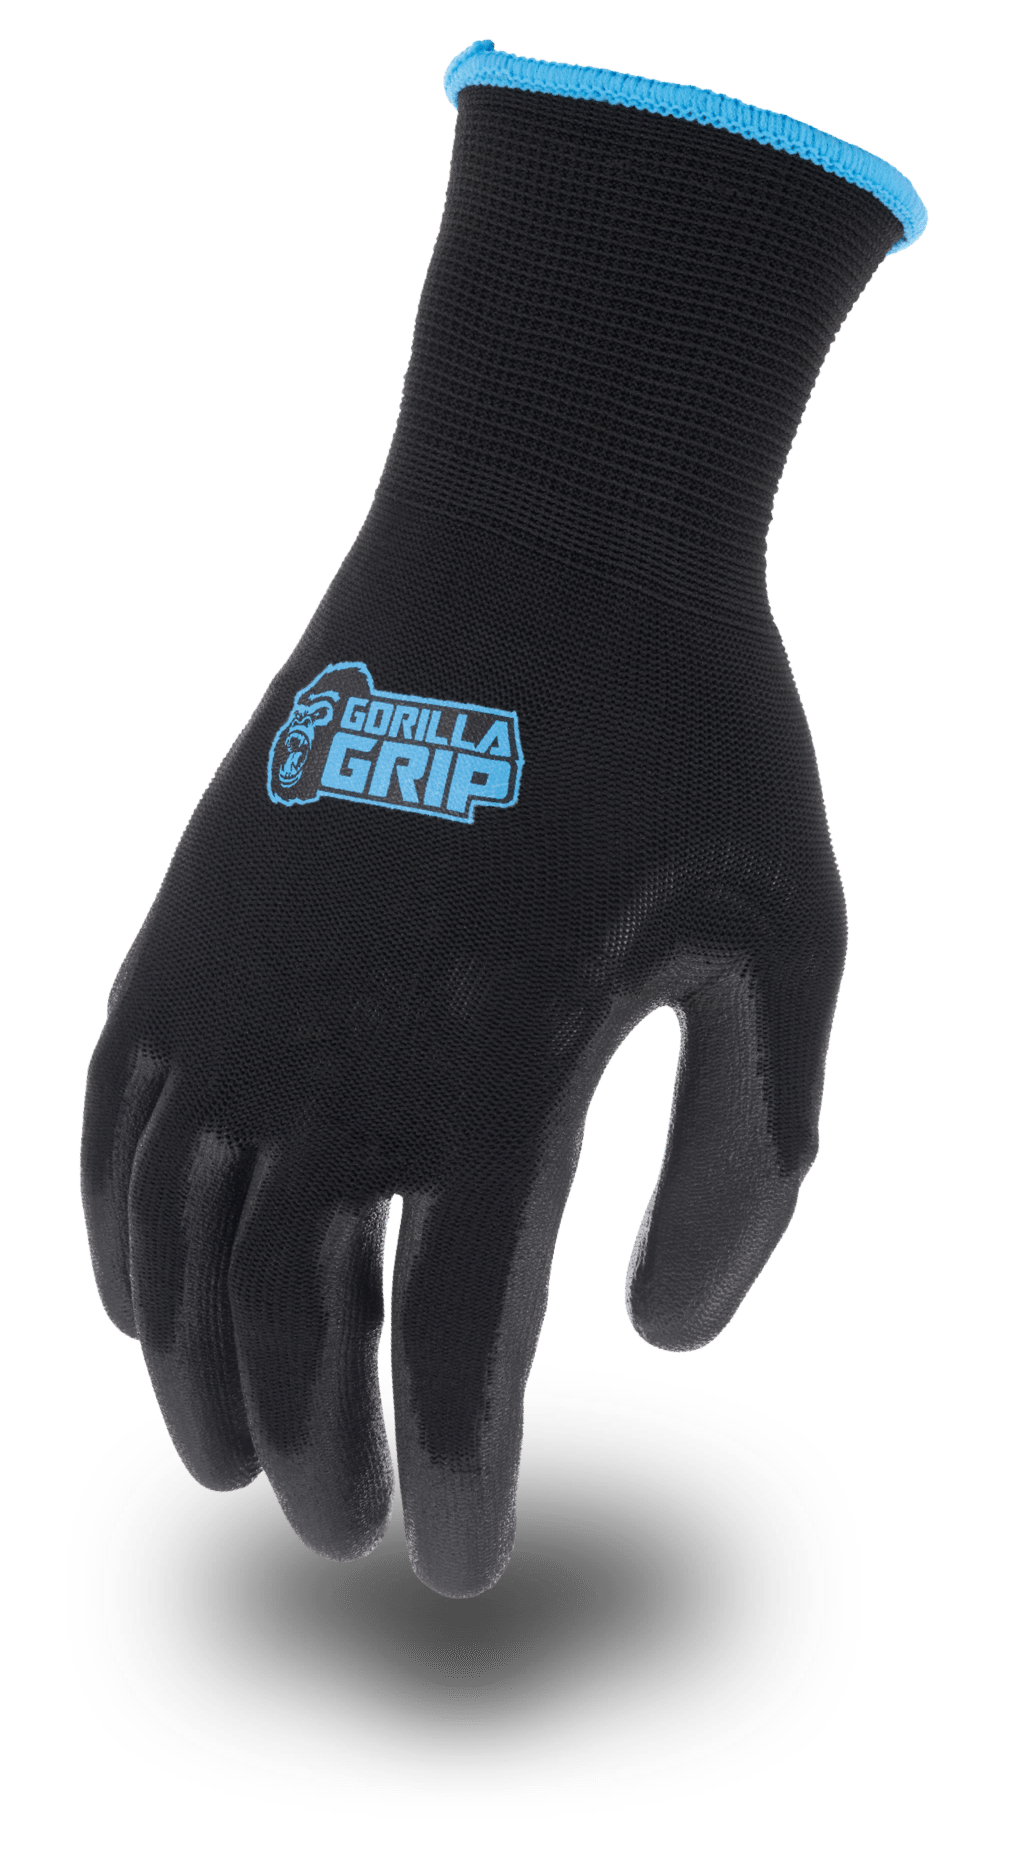 http://www.gorillagripgloves.com/wp-content/uploads/2022/04/never_slip_glove_large.png